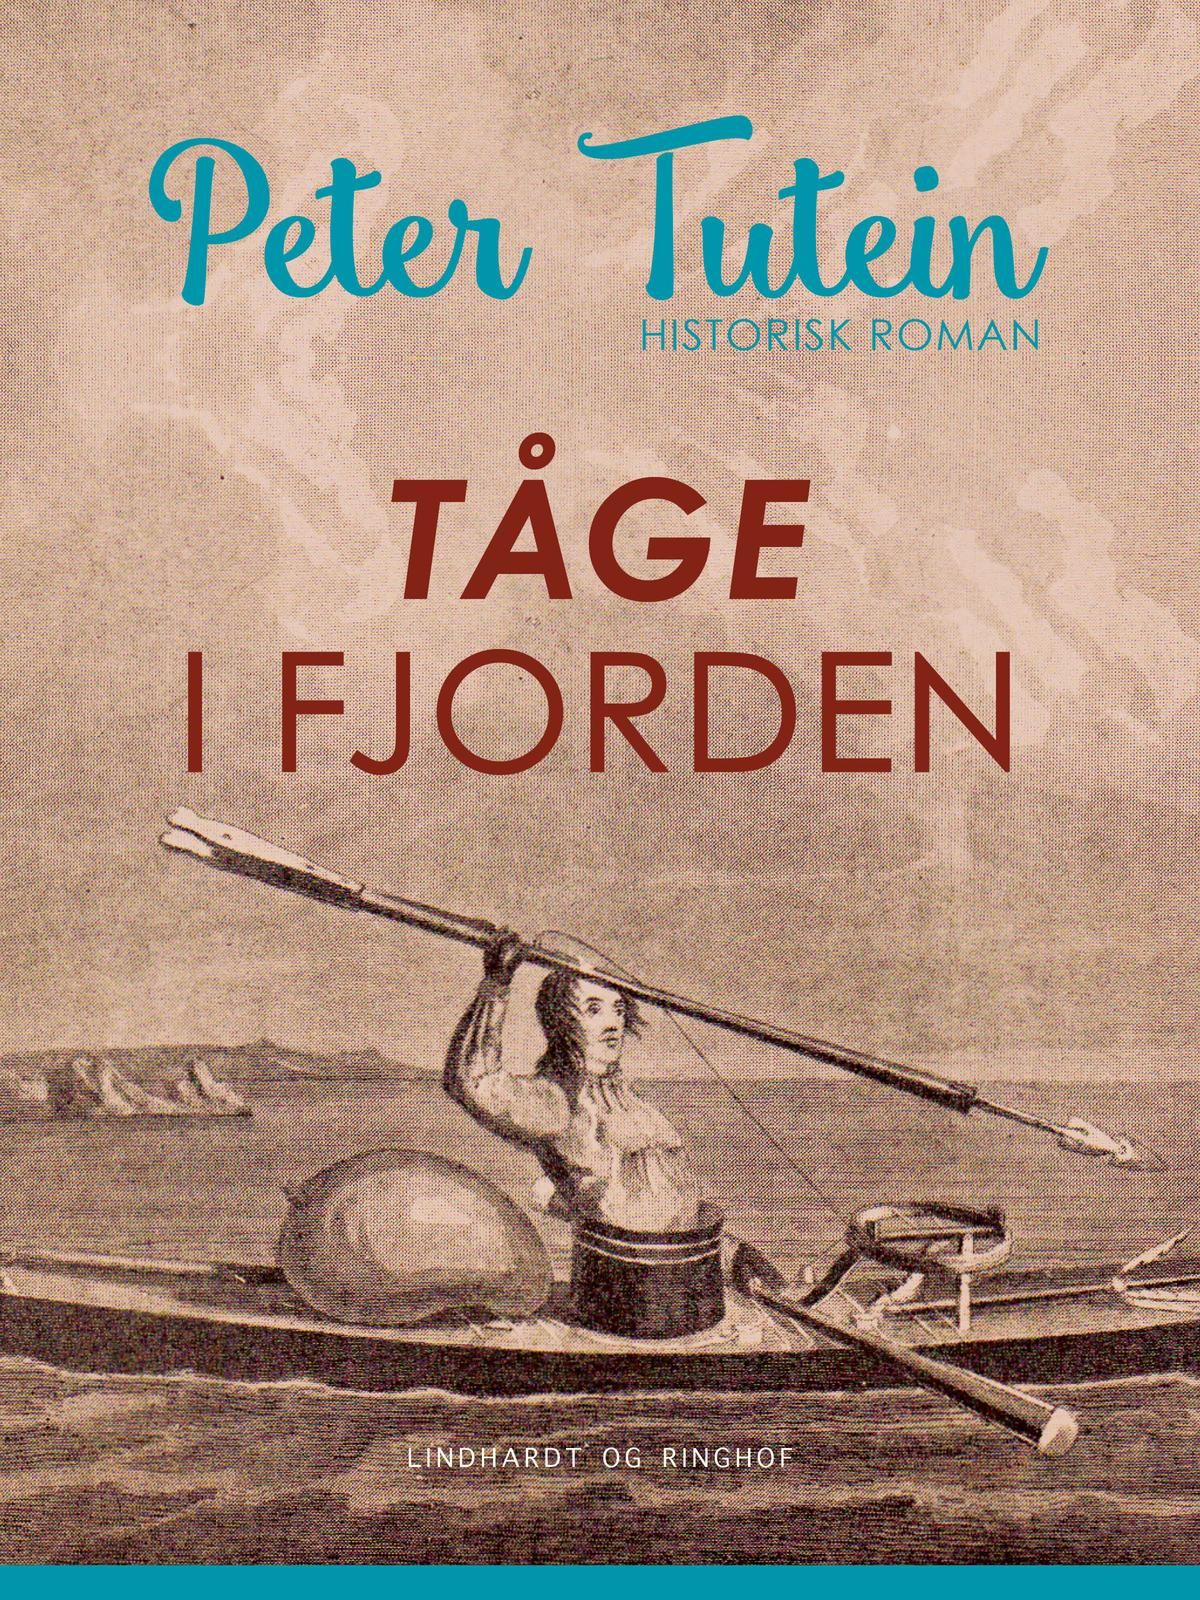 Tåge i fjorden, eBook by Peter Tutein